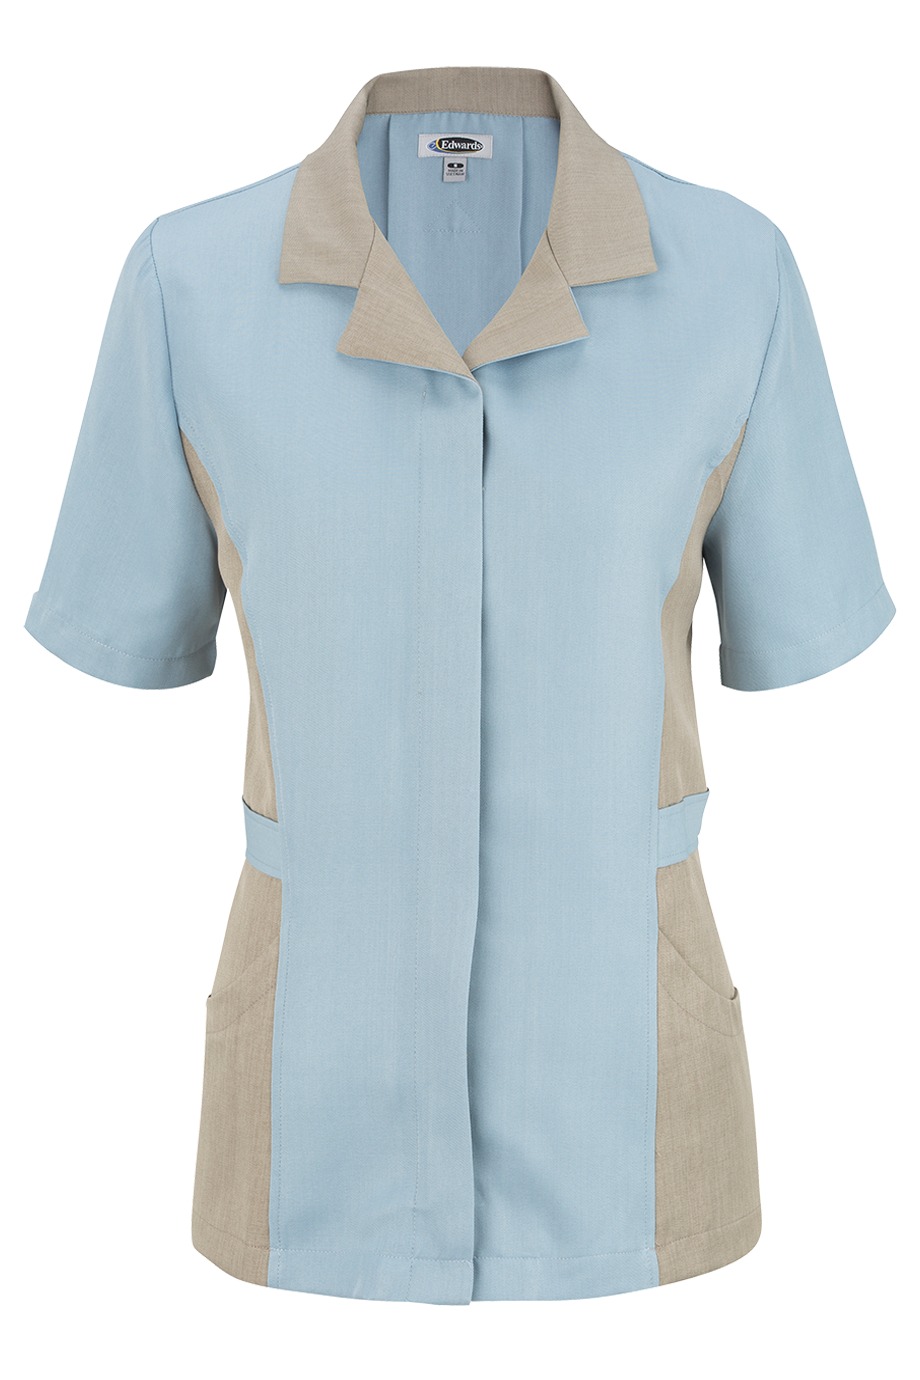 Edwards Garment 7890 - Premier Ladies Tunic